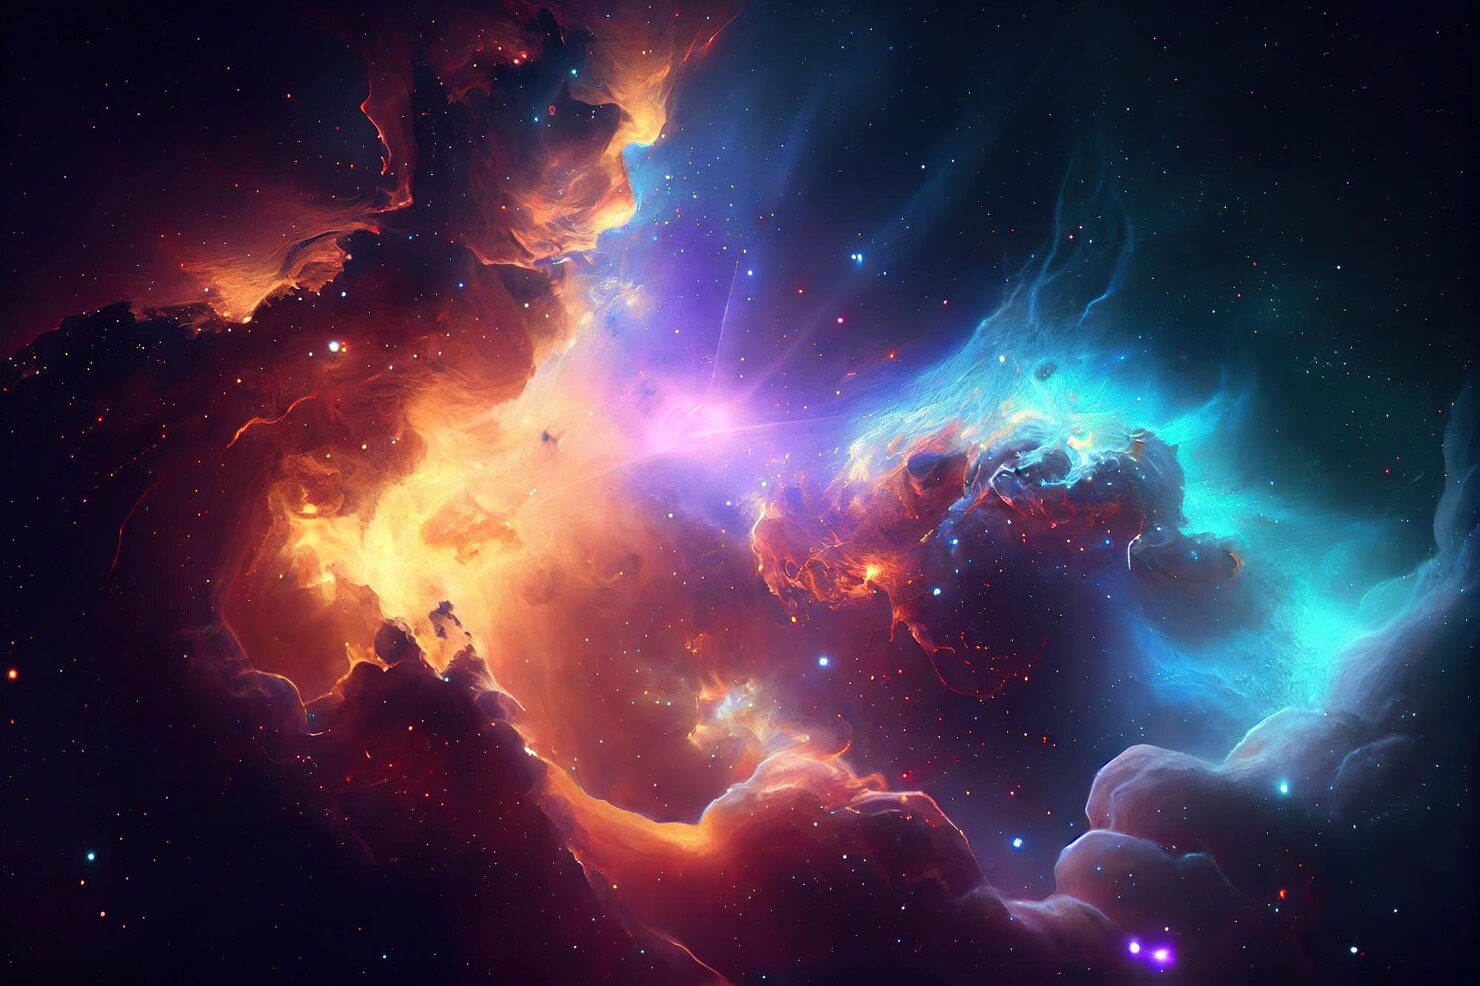 A display of nebulas in space.